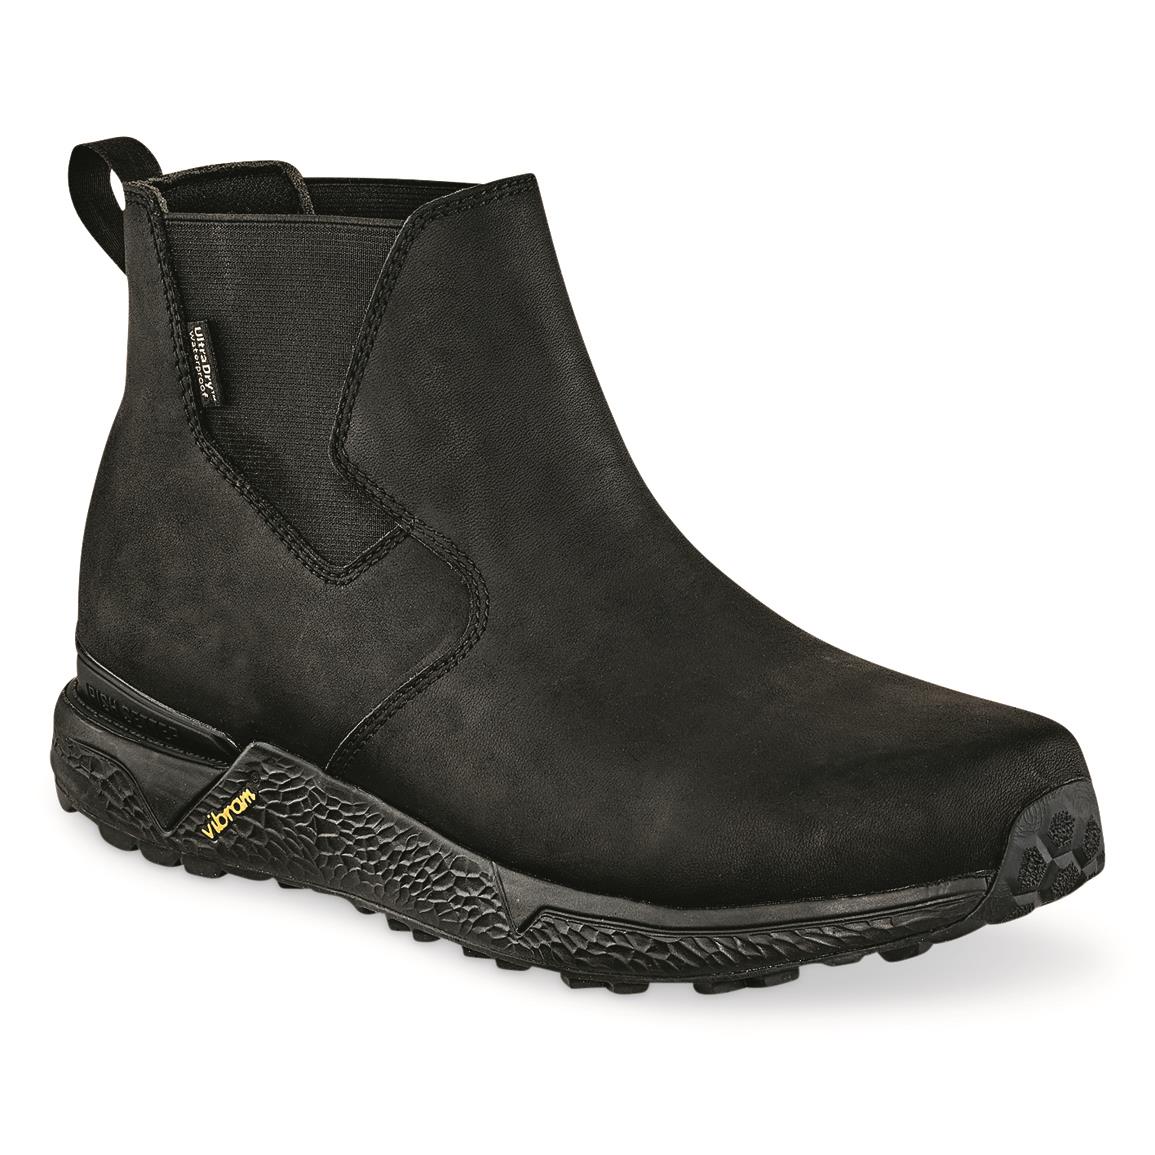 Irish Setter Men's Canyons Waterproof Pull-on Boots, Black